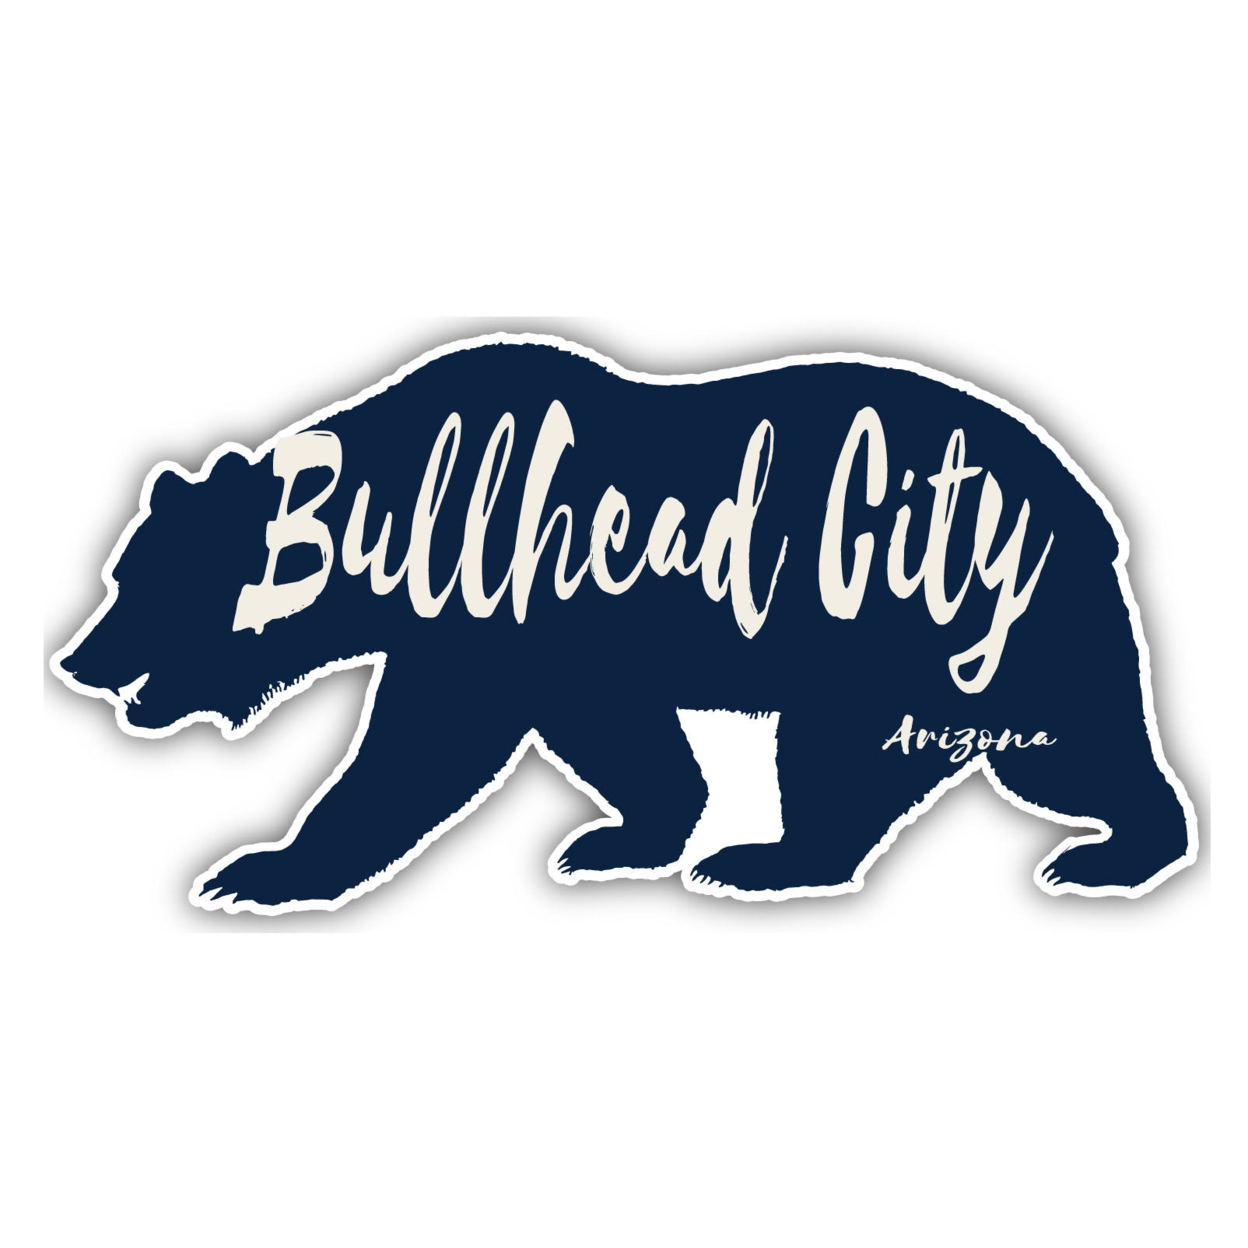 Bullhead City Arizona Souvenir Decorative Stickers (Choose Theme And Size) - Single Unit, 6-Inch, Bear